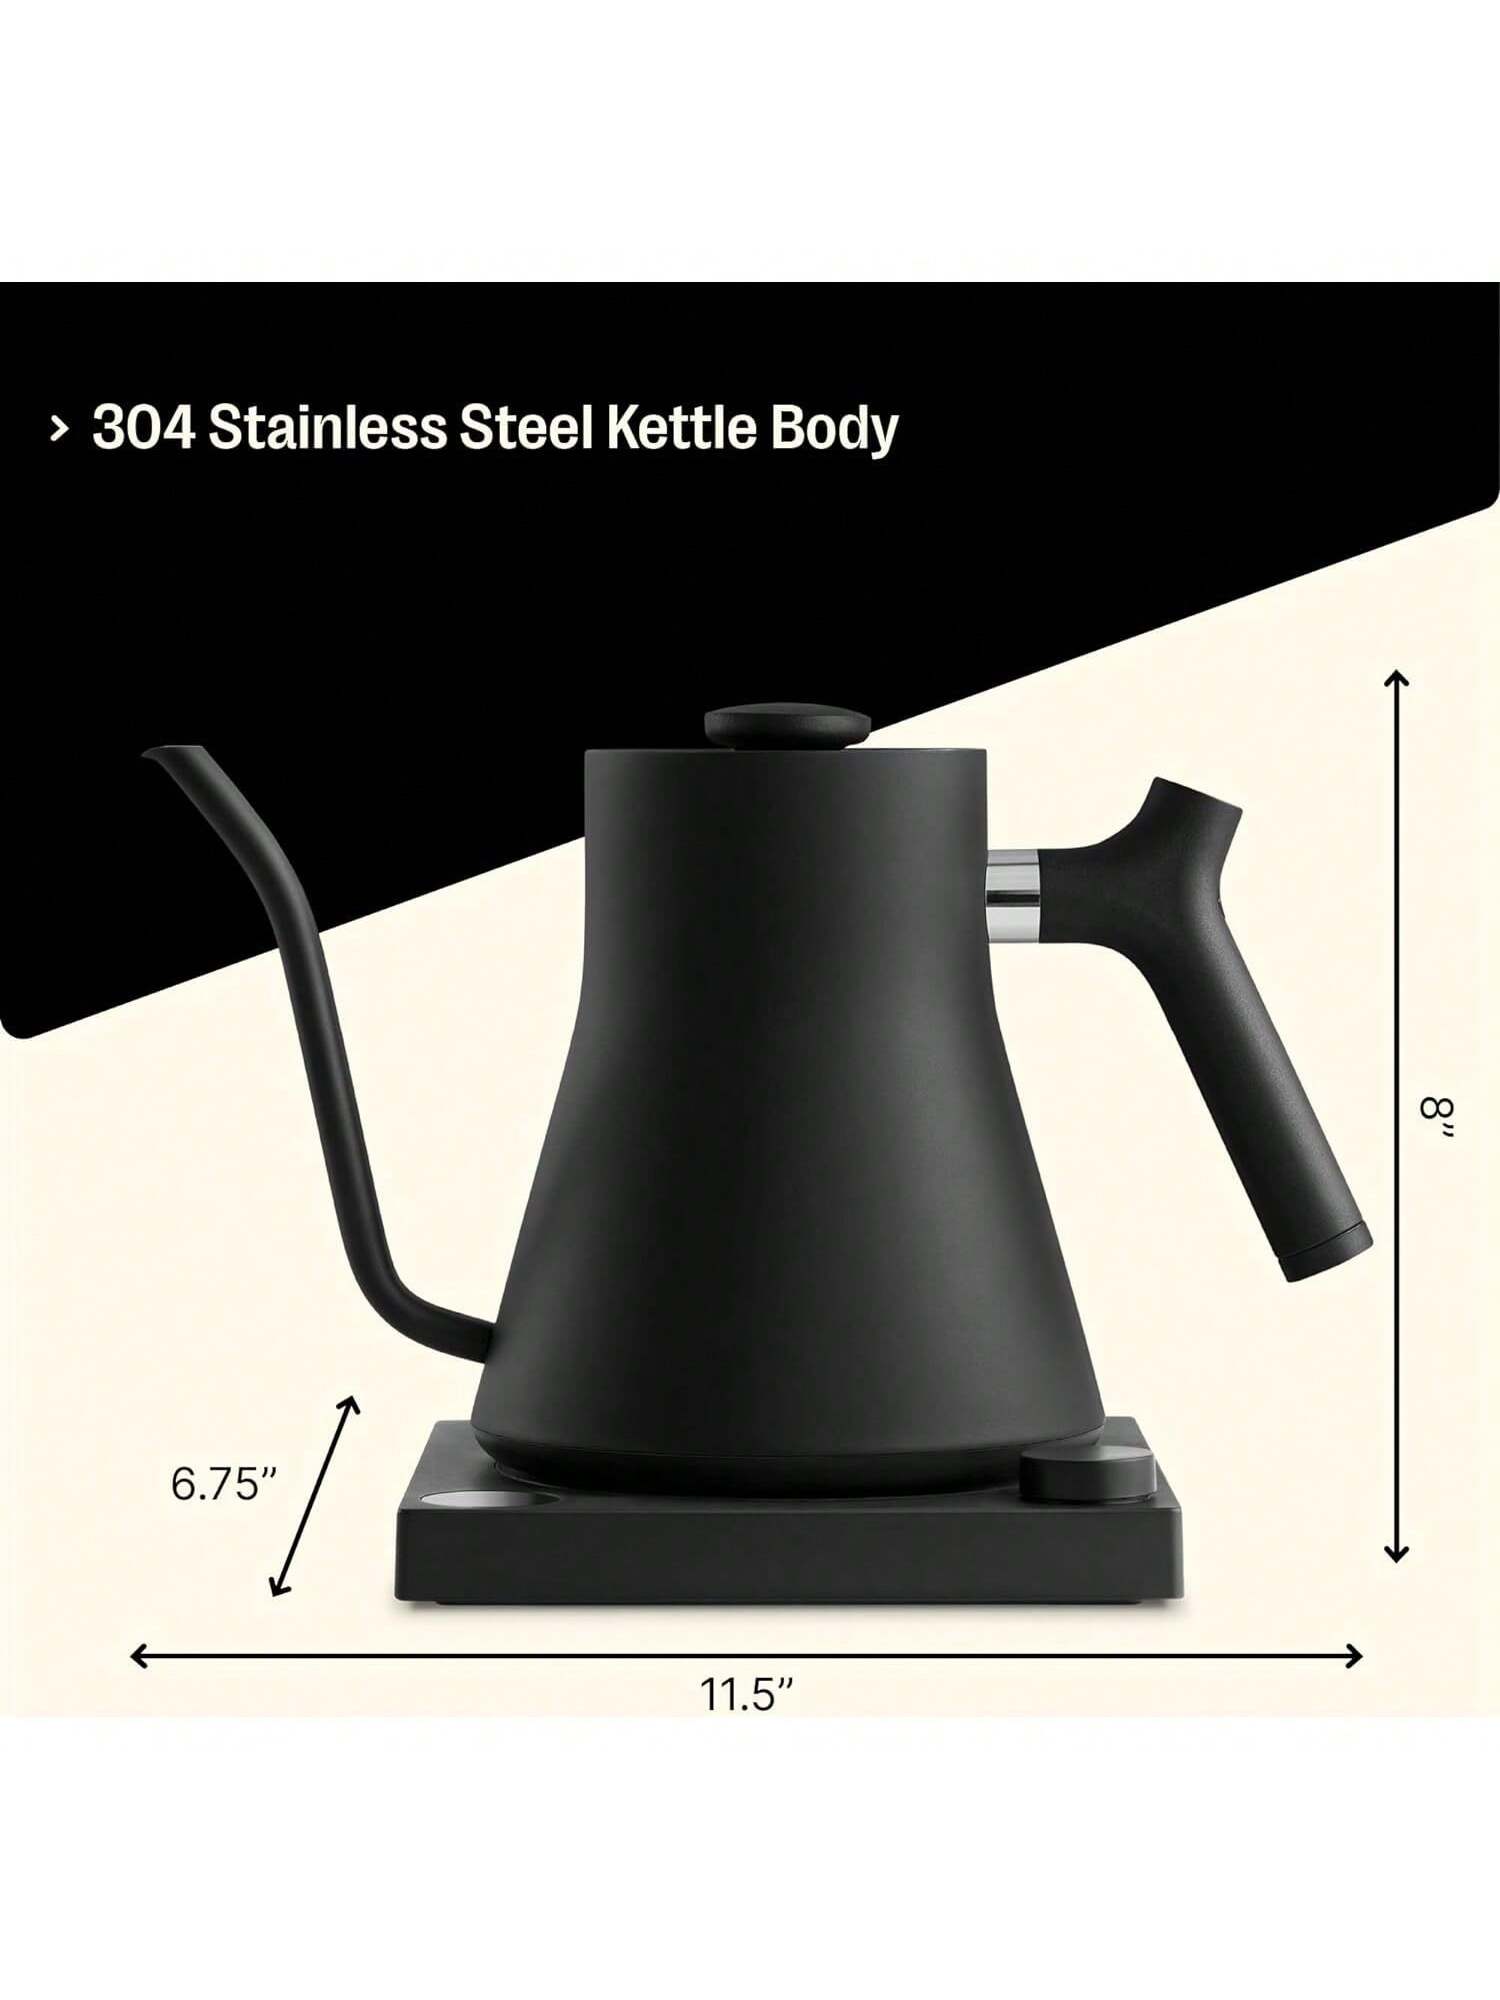 Electric Gooseneck Kettle with Temperature Control, Pour Over Coffee & Tea,  1200W 180-sec Quick Boil Time, 600g Ultra Light, 0.9L, Black 